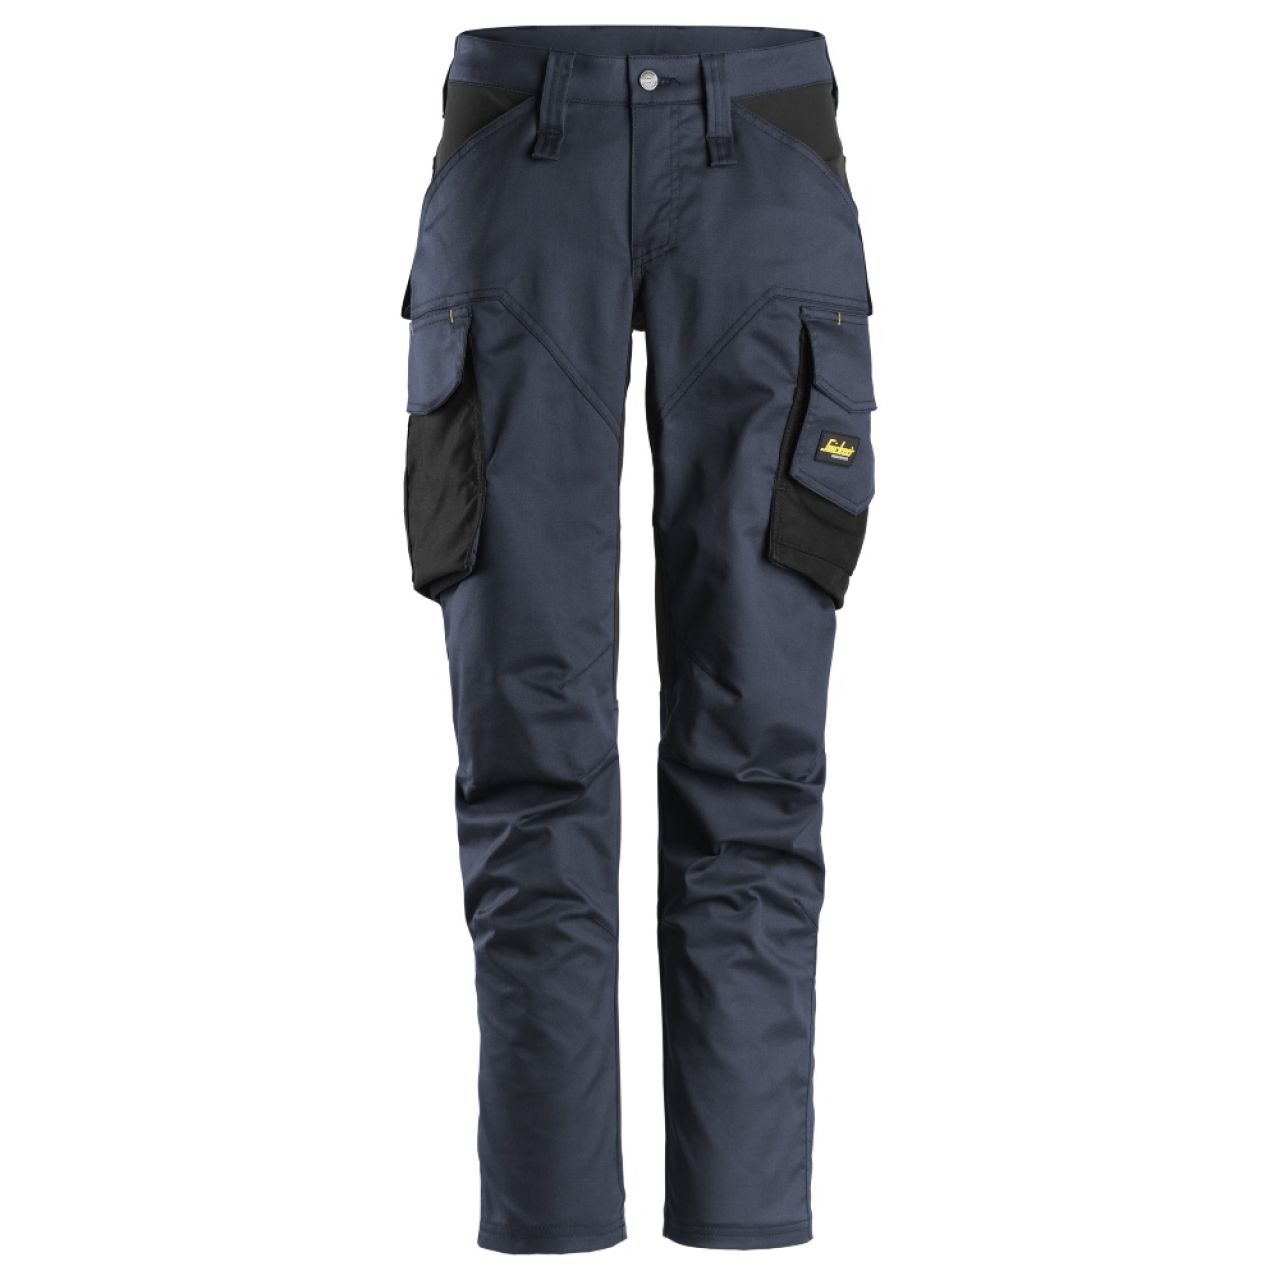 6703 Pantalones largos de trabajo elásticos para mujer con bolsillos para rodilleras AllroundWork azul marino-negro talla 52